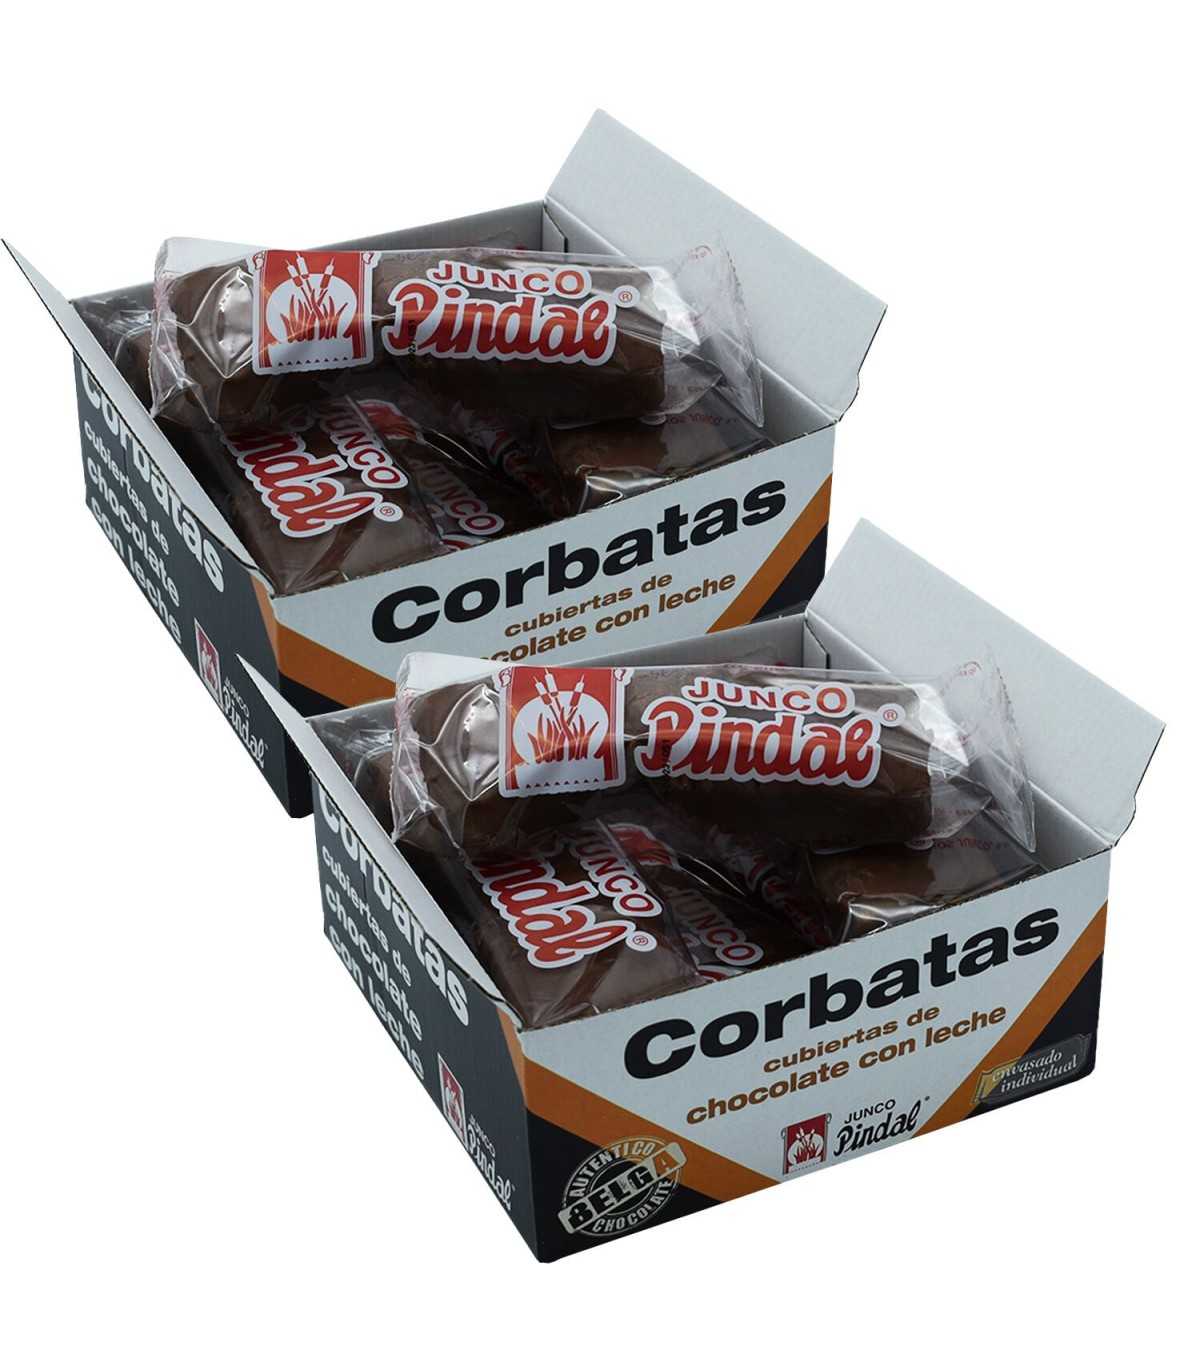 JUNCO PINDAL Corbatas de Unquera Bañada en Chocolate con Leche_caja abierta